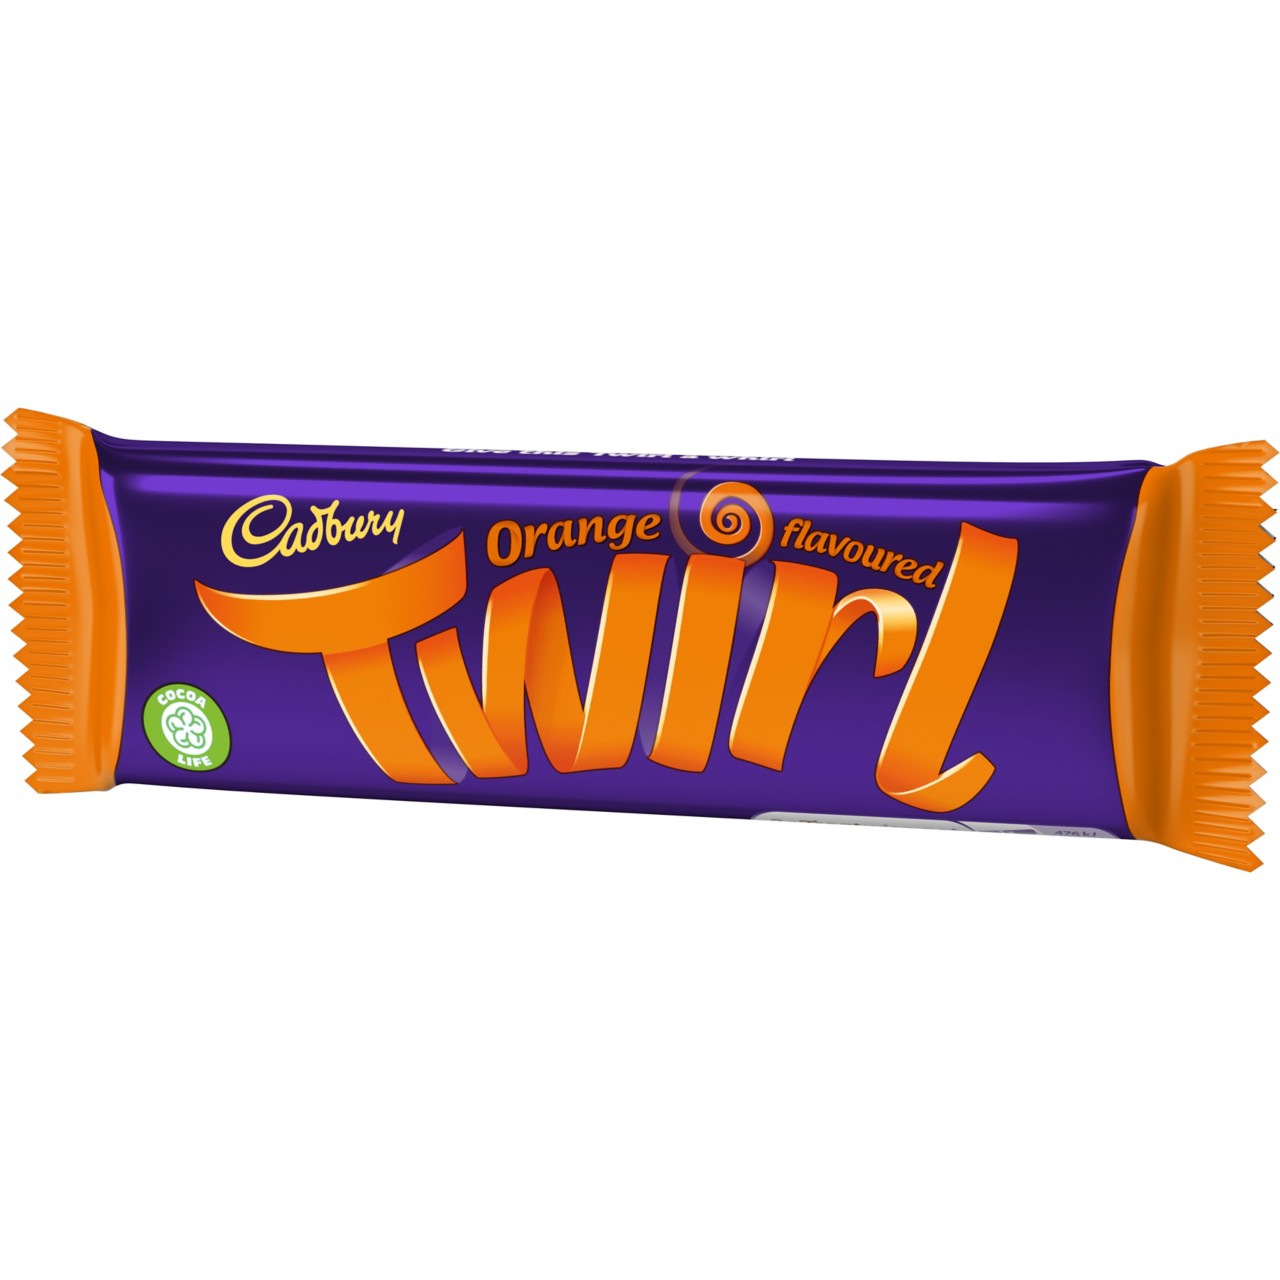 Cadbury Twirl Orange: The UNLIMITED edition